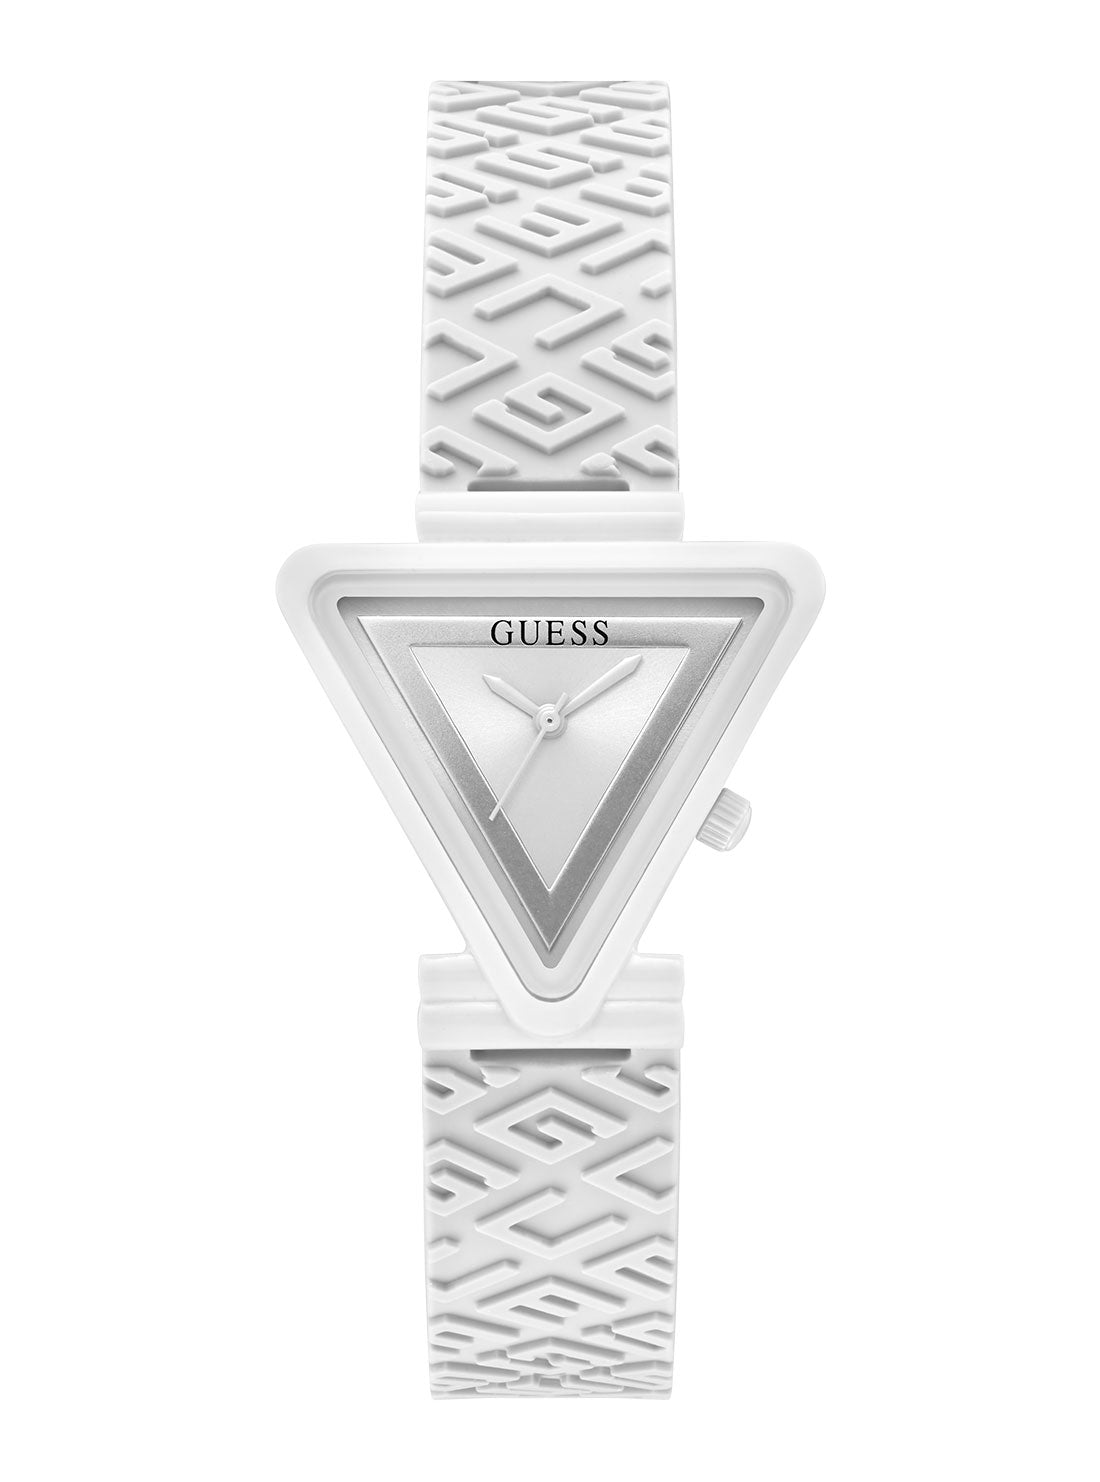 GUESS Women's White Fame Logo Silicone Watch GW0543L1 Front View